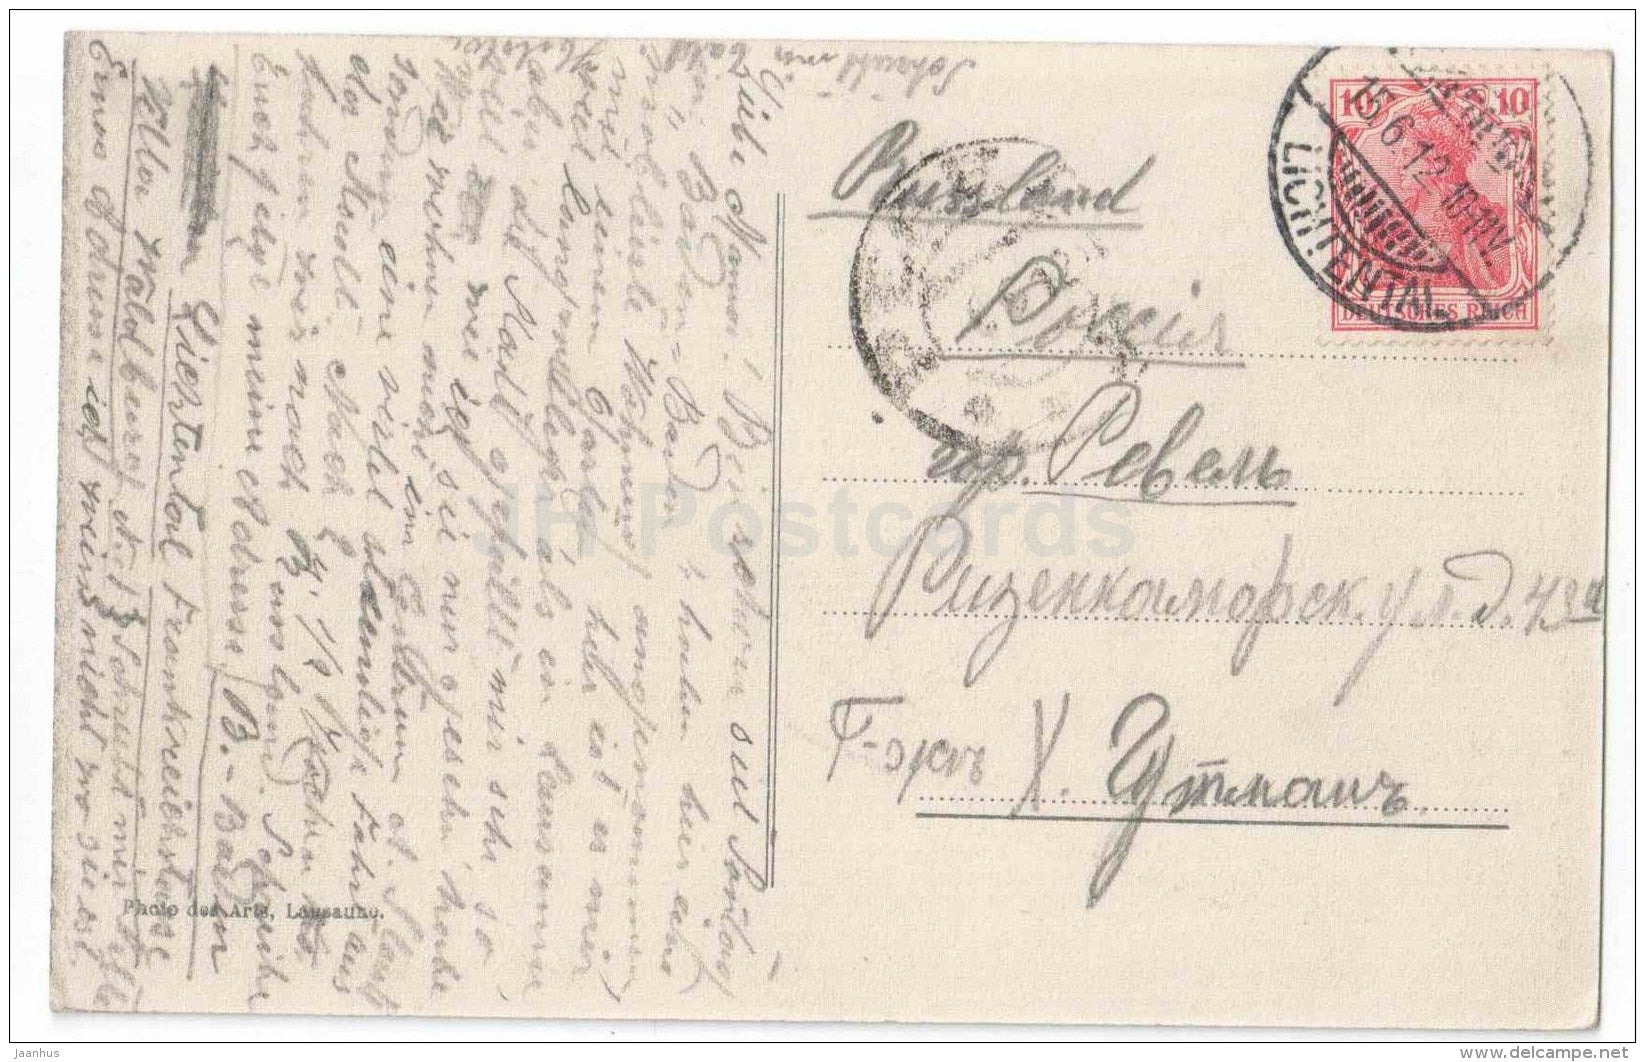 Lausanne Cascade de Sauvabelin - 3843 - Switzerland - sent from Germany Lichtental to Estonia Tsarist Russia Reval 1910 - JH Postcards